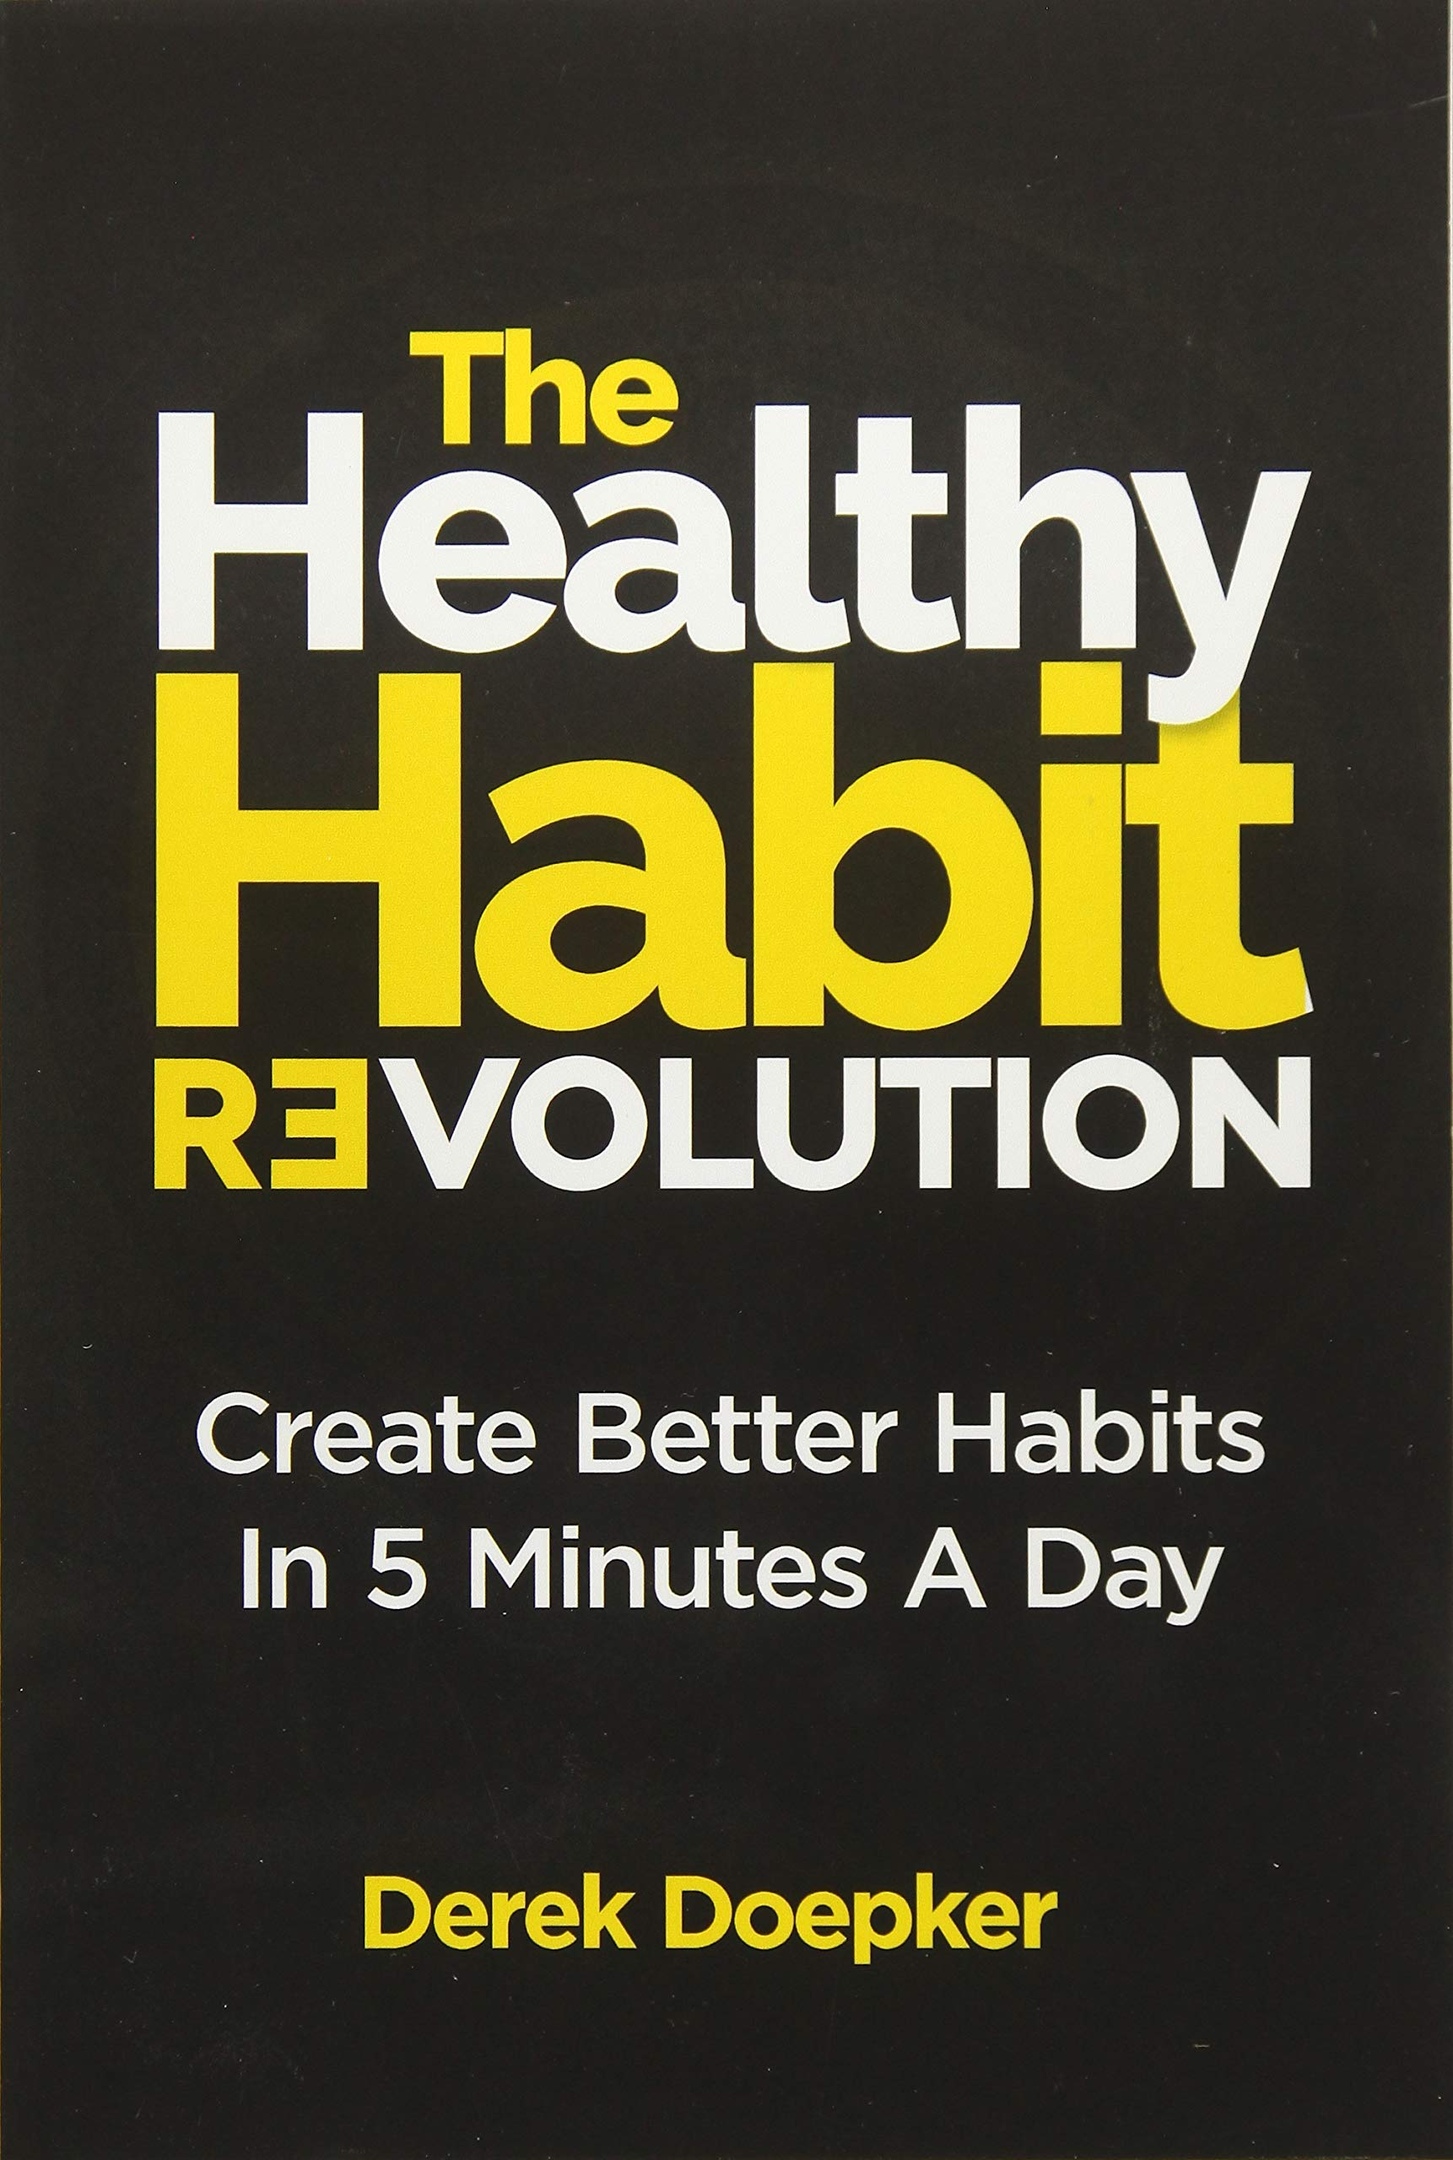 Derek Doepker – The Healthy Habit Revolution